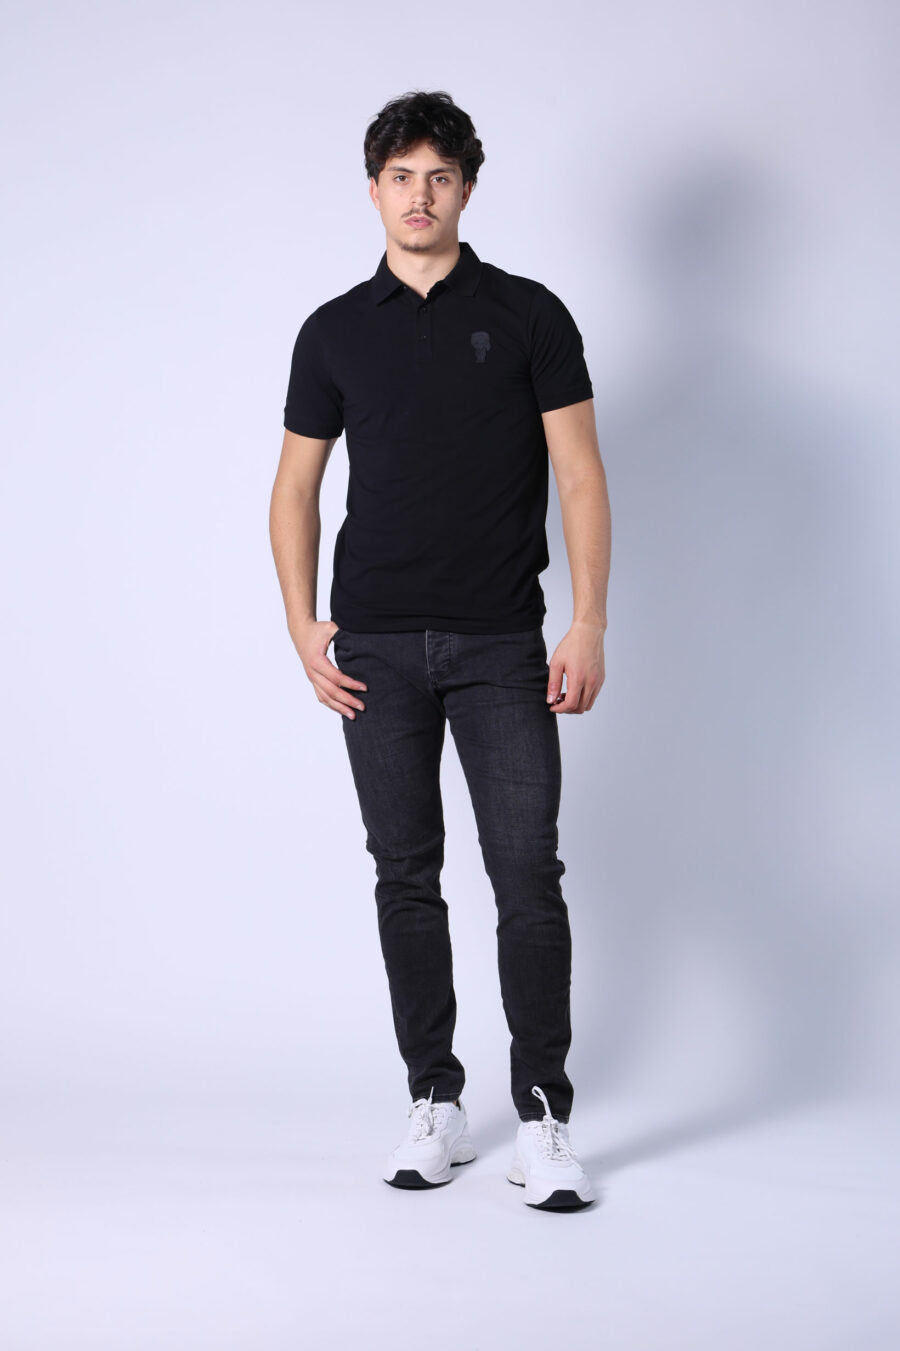 Black polo shirt with monochrome mini-logo - Untitled Catalog 05715